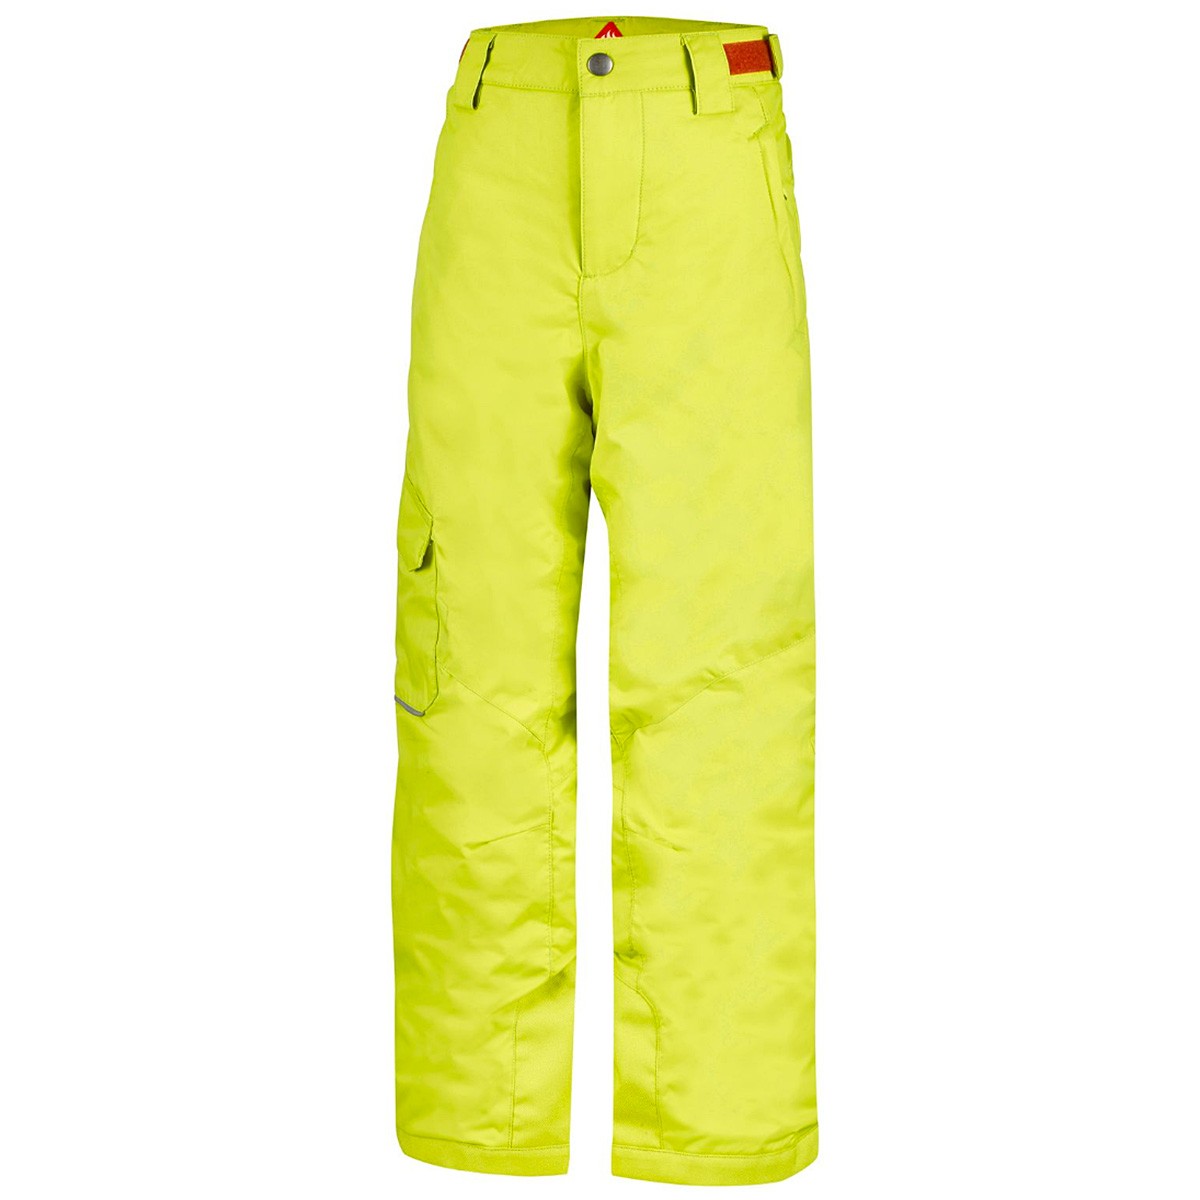 Pantalones esquí Columbia Bugaboo - Ropa esquí | ES